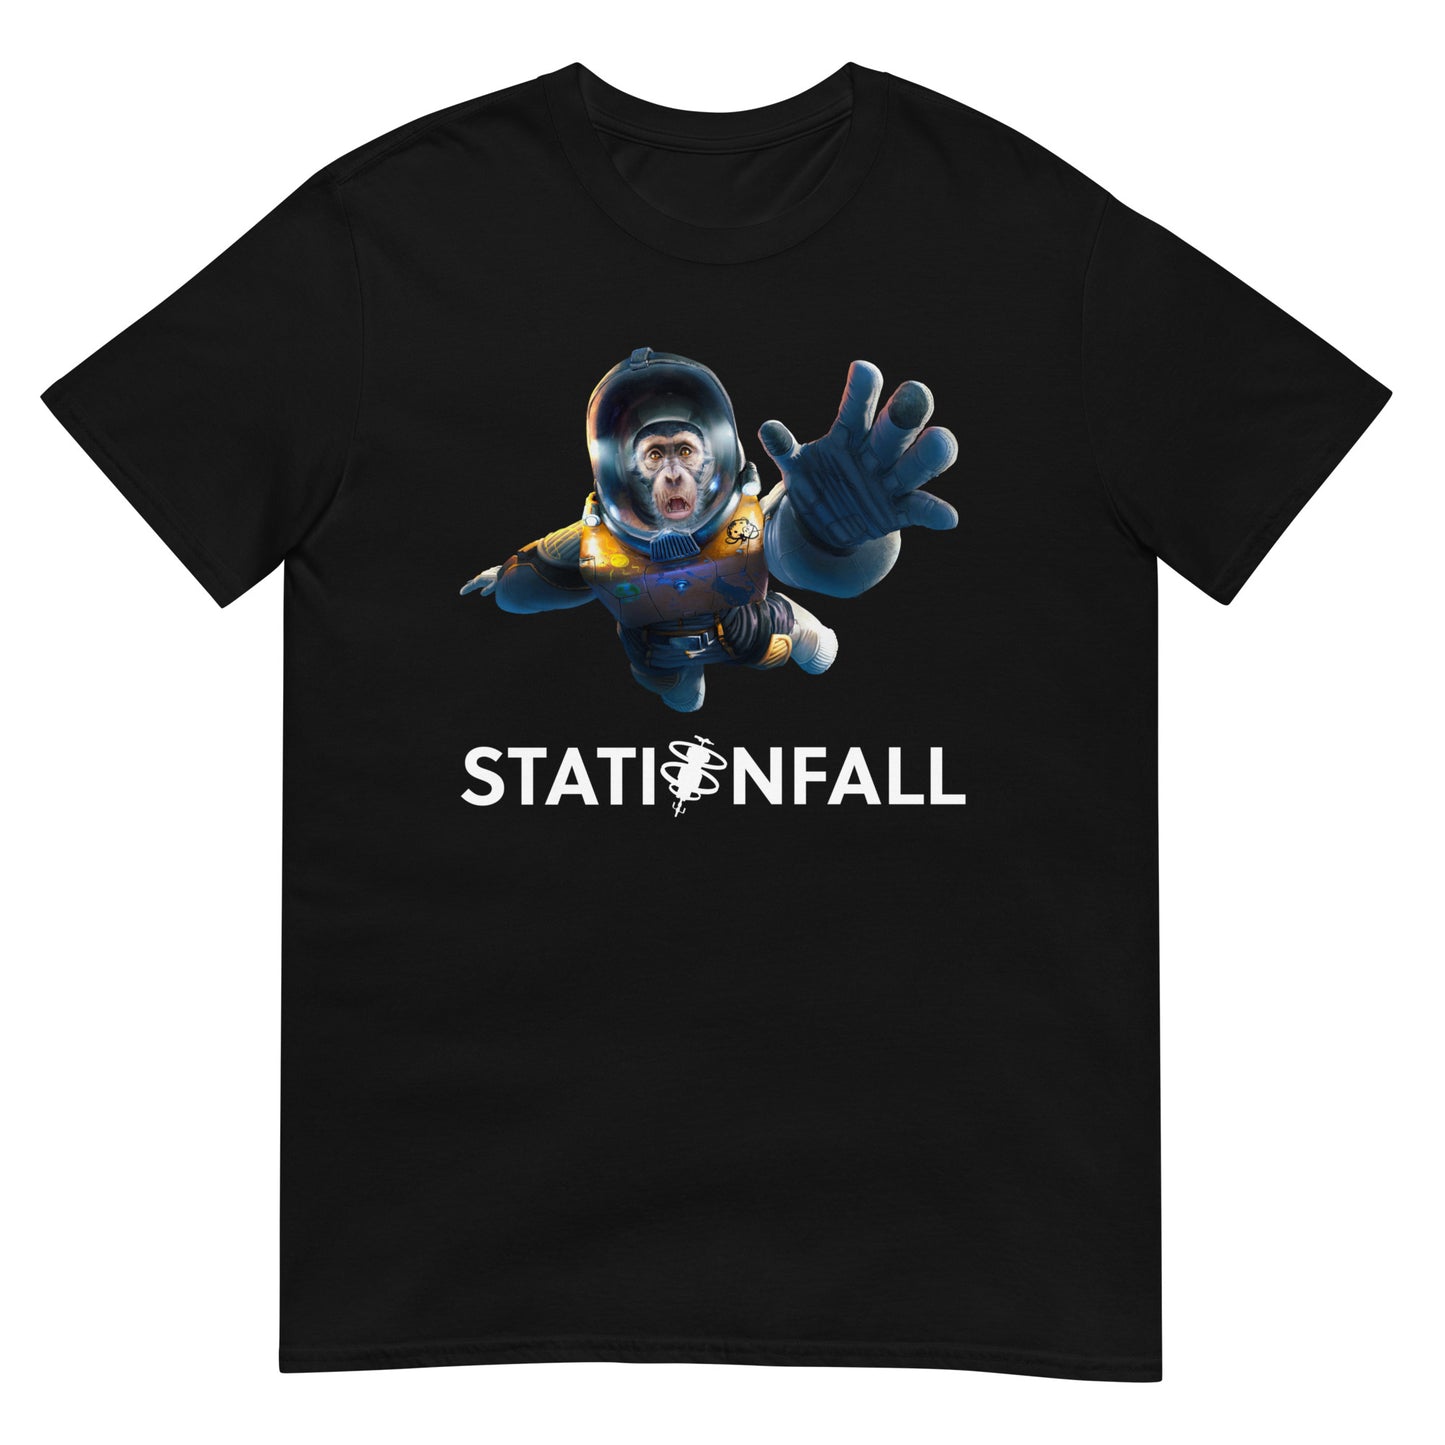 Stationfall Space Chimp Short-Sleeve Unisex T-Shirt